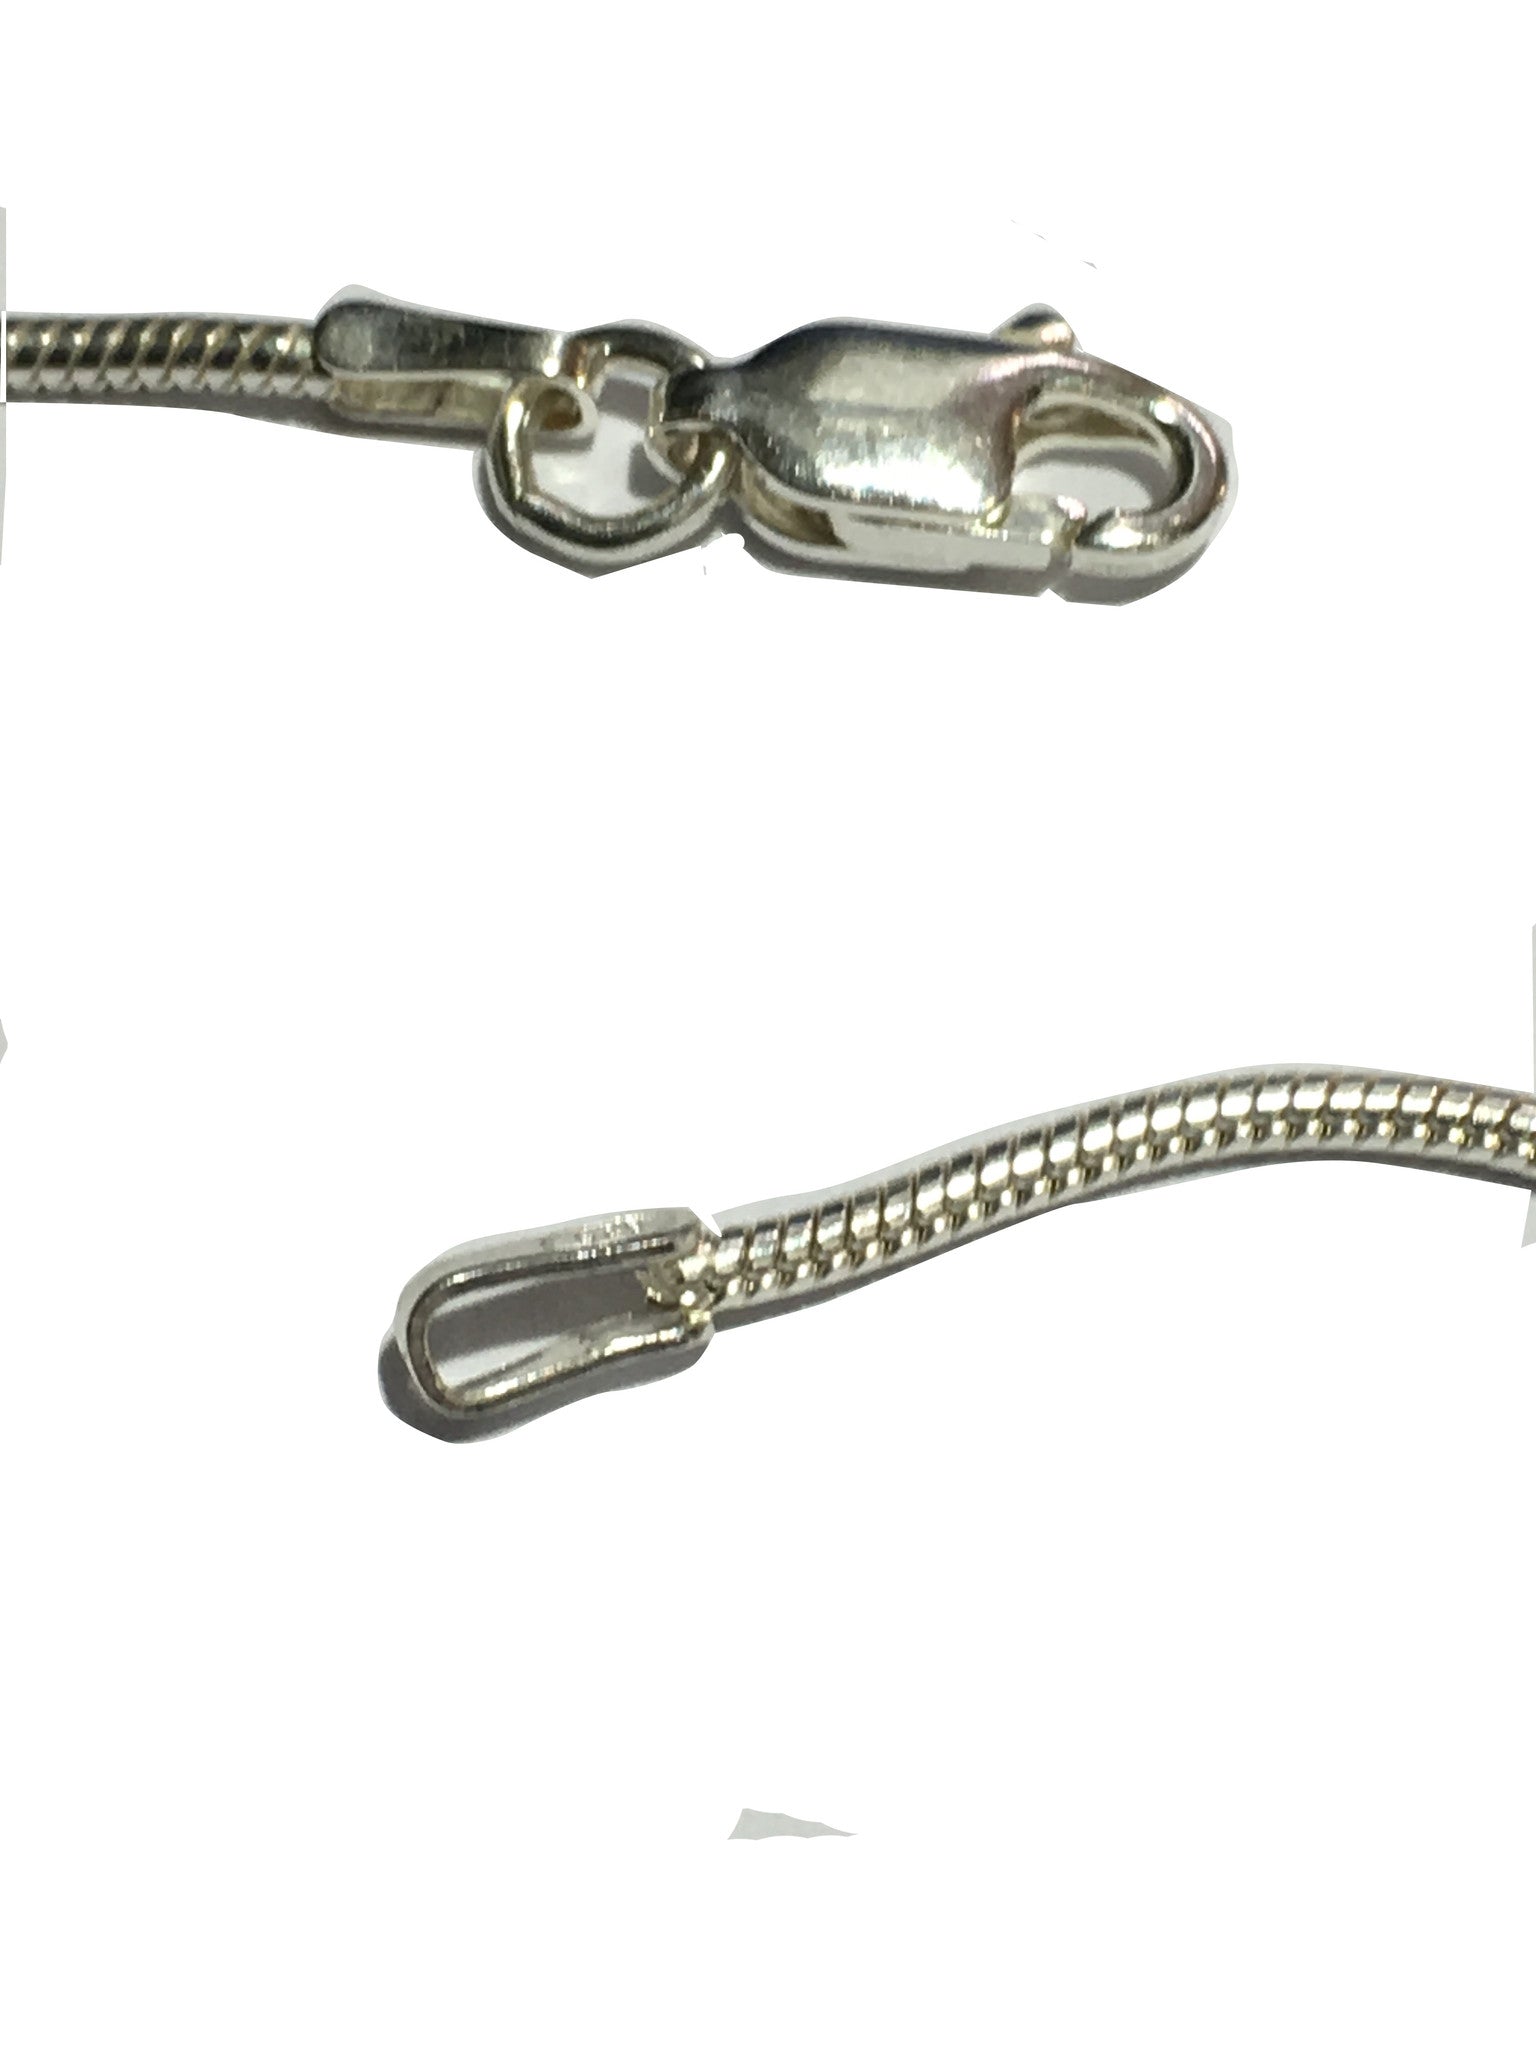 Sterling Silver Chain - 18" / 46cm long, Diamond Cut - Snake Style Slinky Chain - 925 Sterling Silver